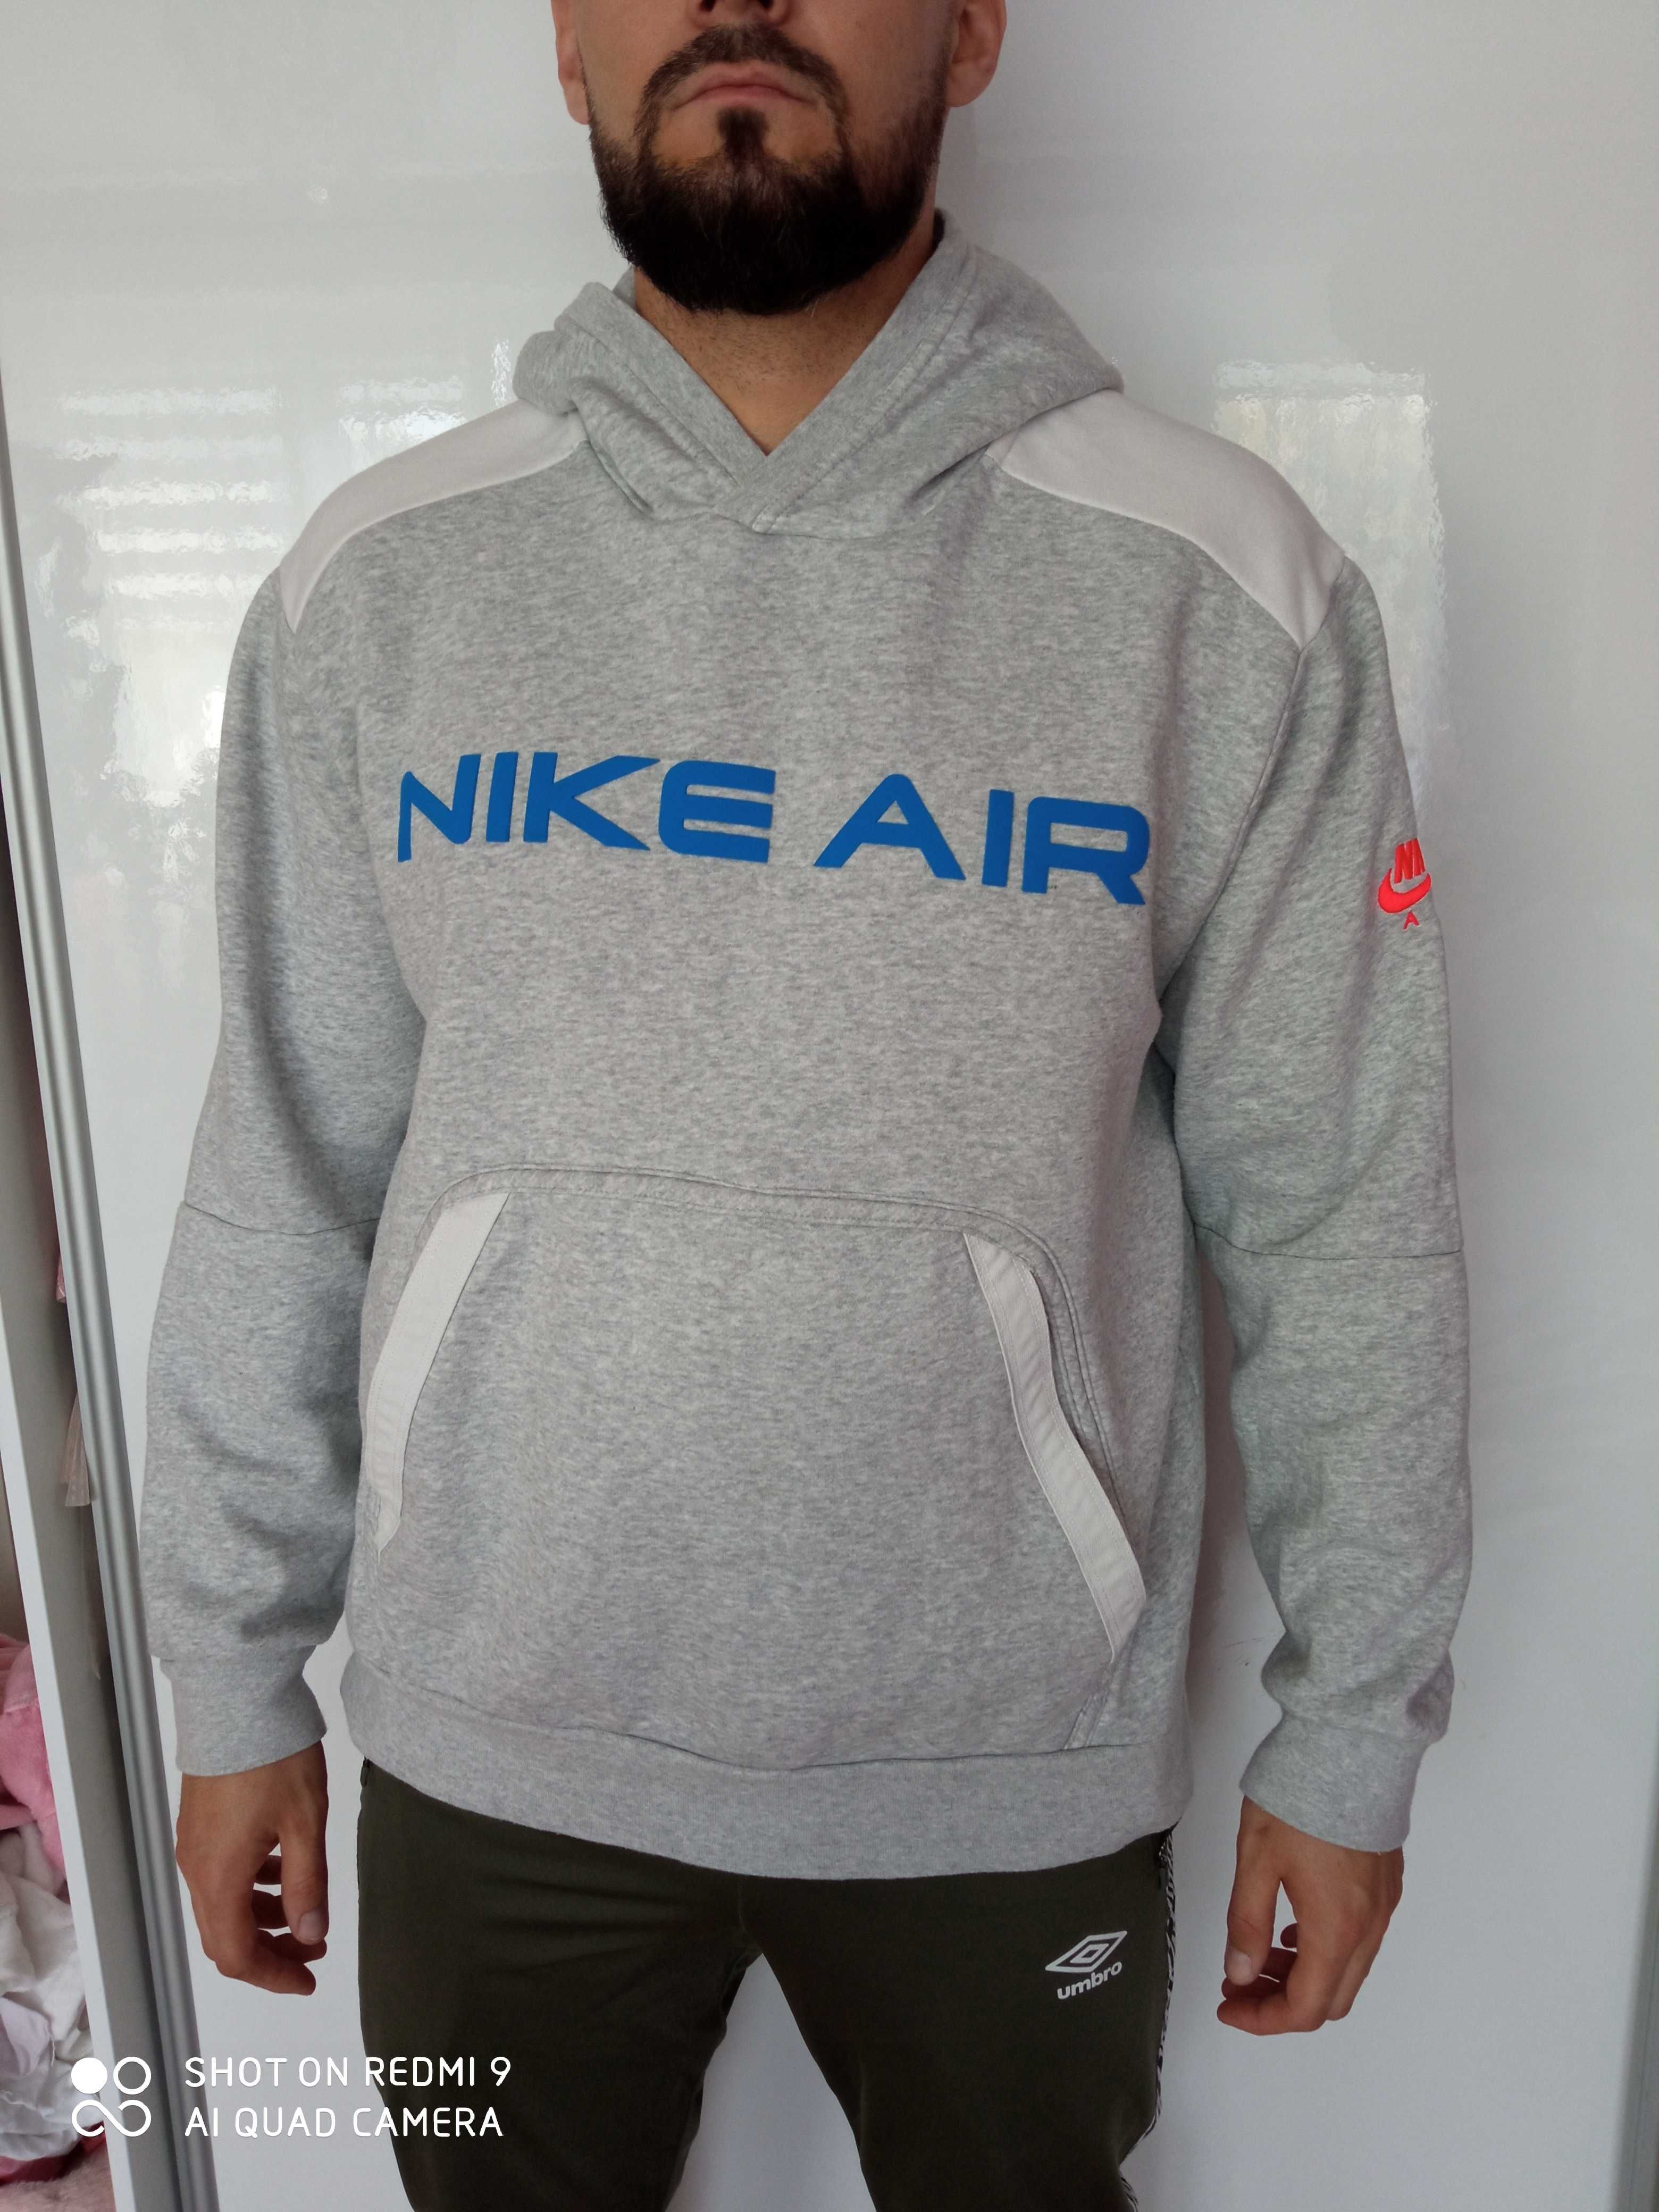 Bluza męska Nike Air XL oryginalna stan bardzo dobry